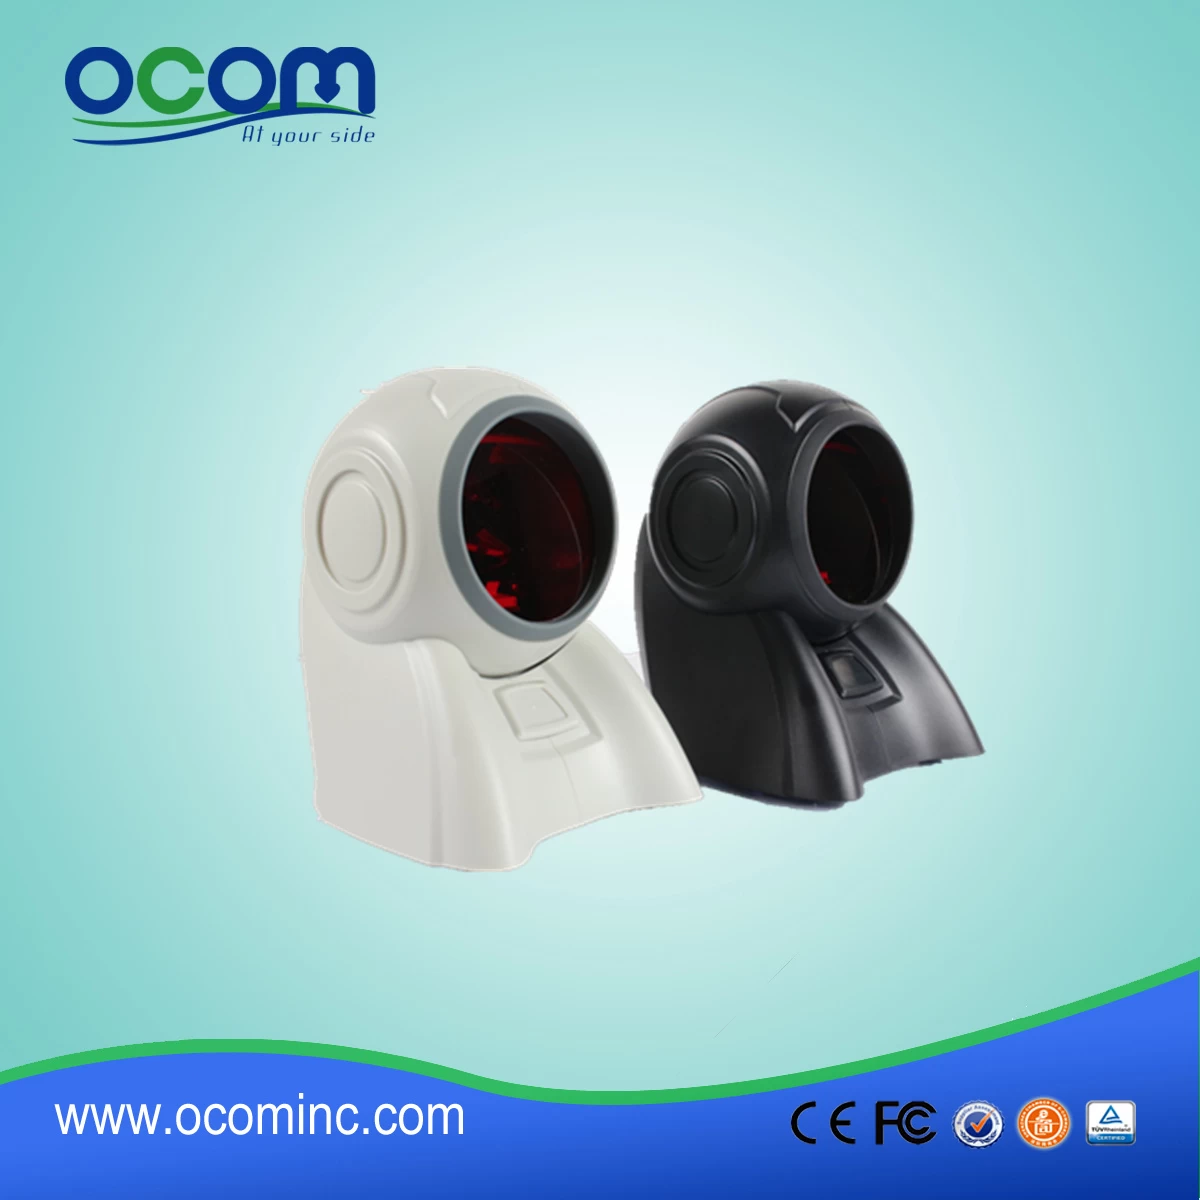 high quality omni-directional barcode reader, omni barcode scanner gun